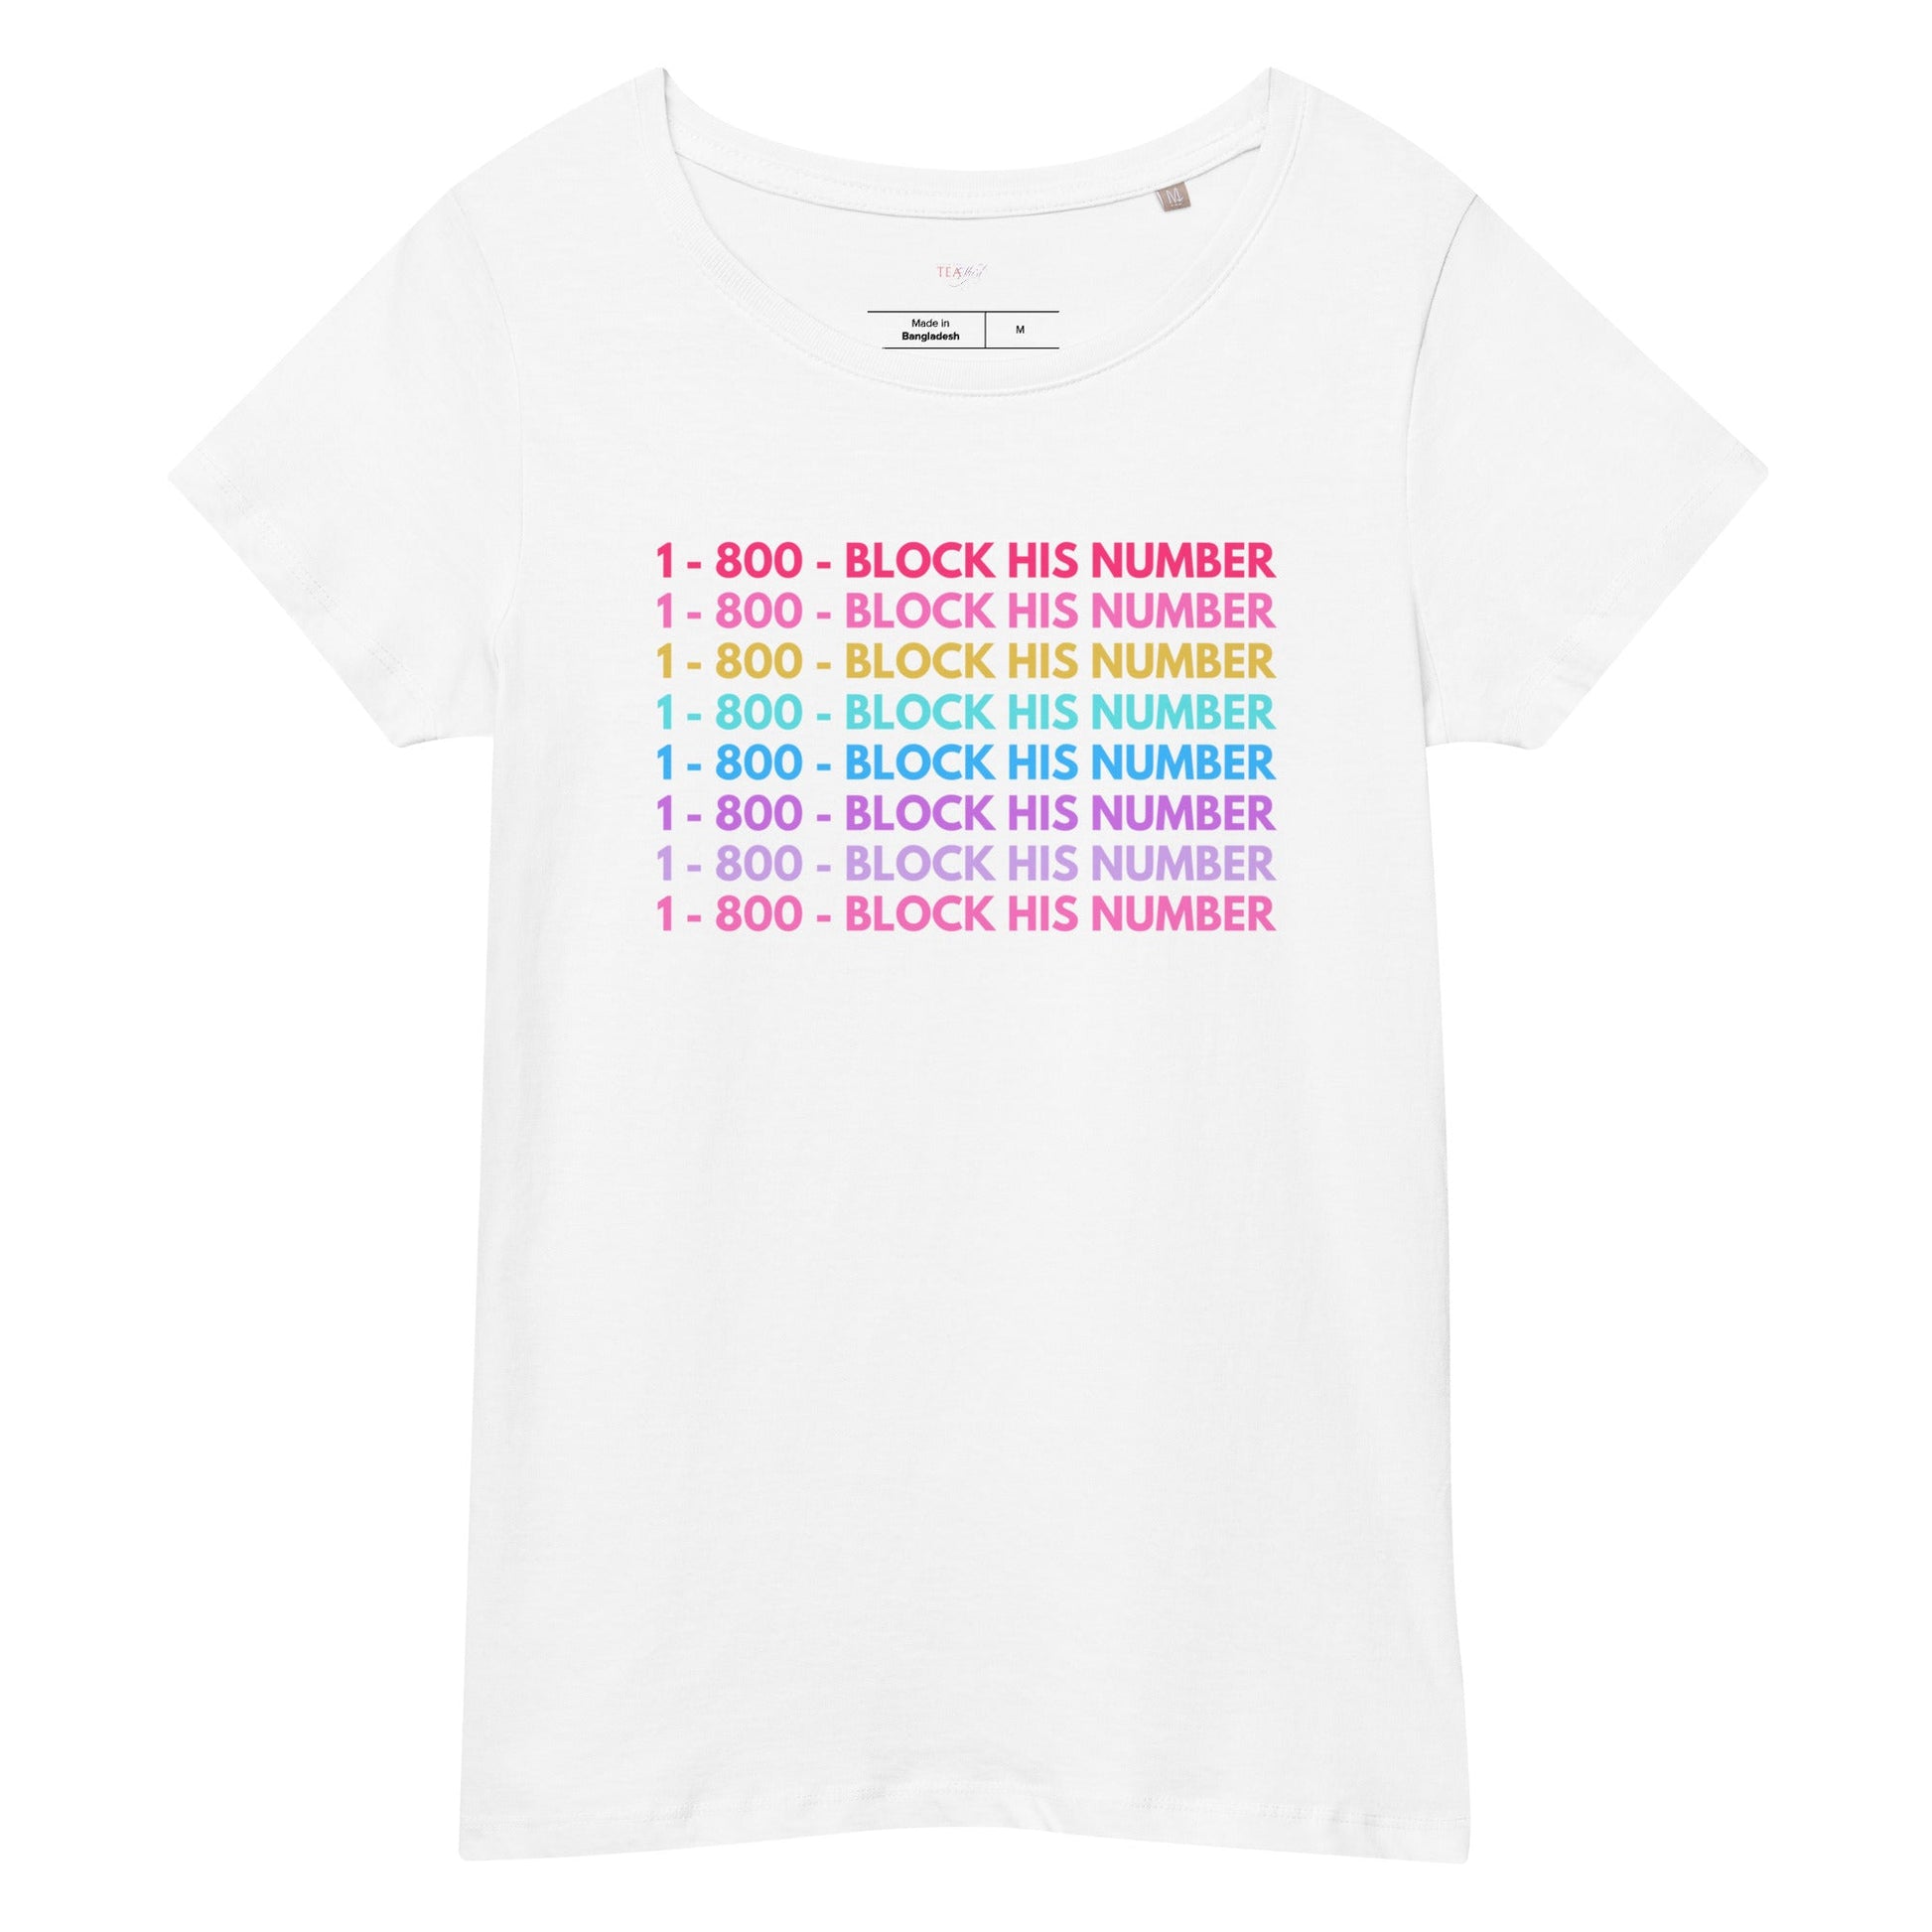 1-800 BLOCK HIS NUMBER | Women’s Premium T-shirt - Catch This Tea Shirts